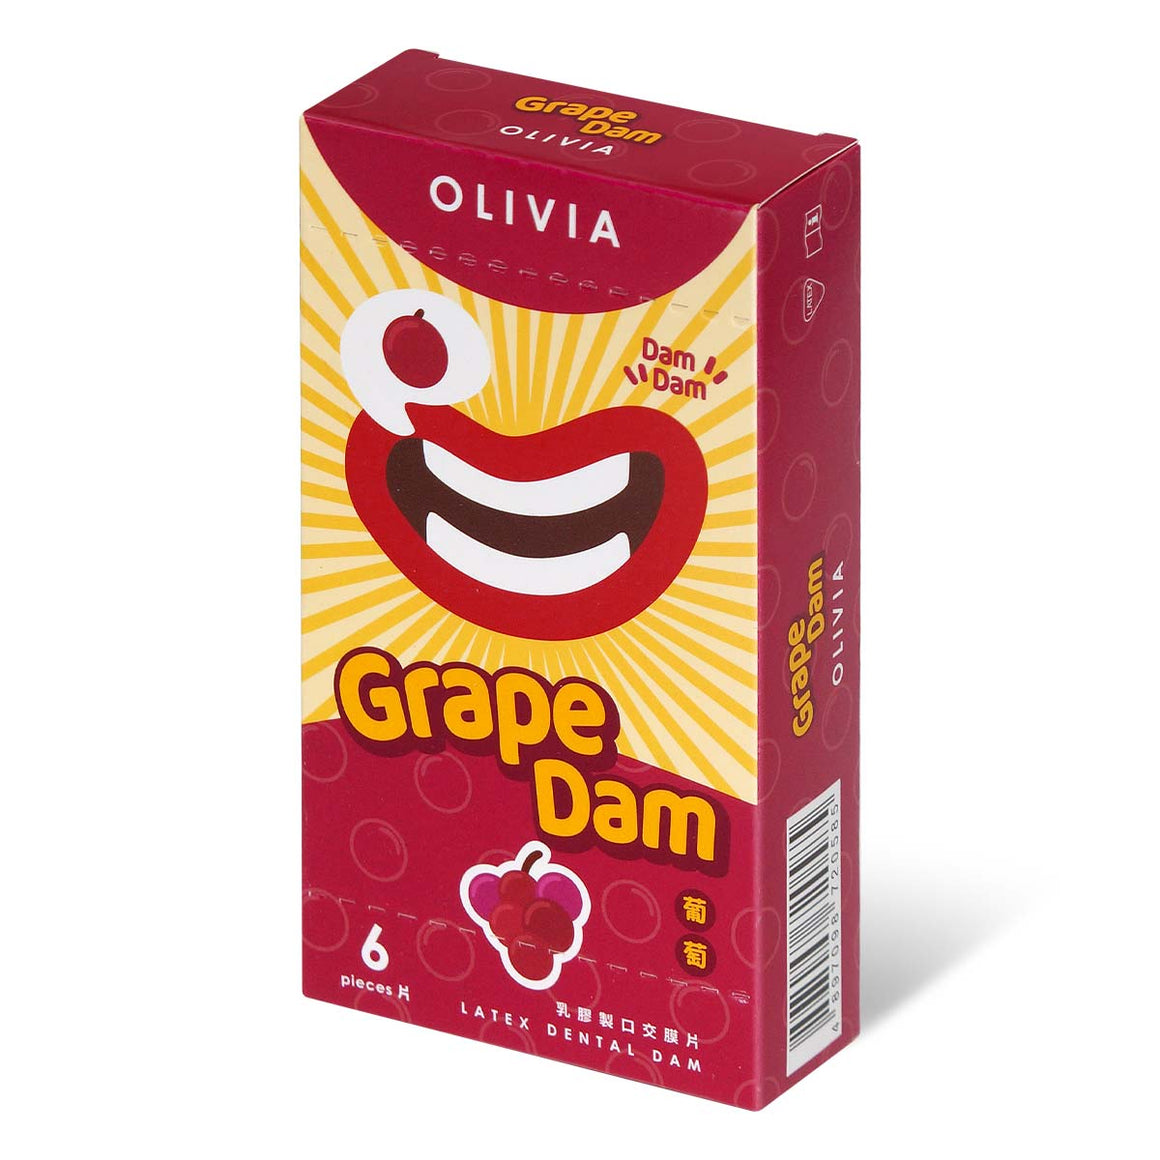 Olivia 奧莉維亞 葡萄香味 6 片口交膜片